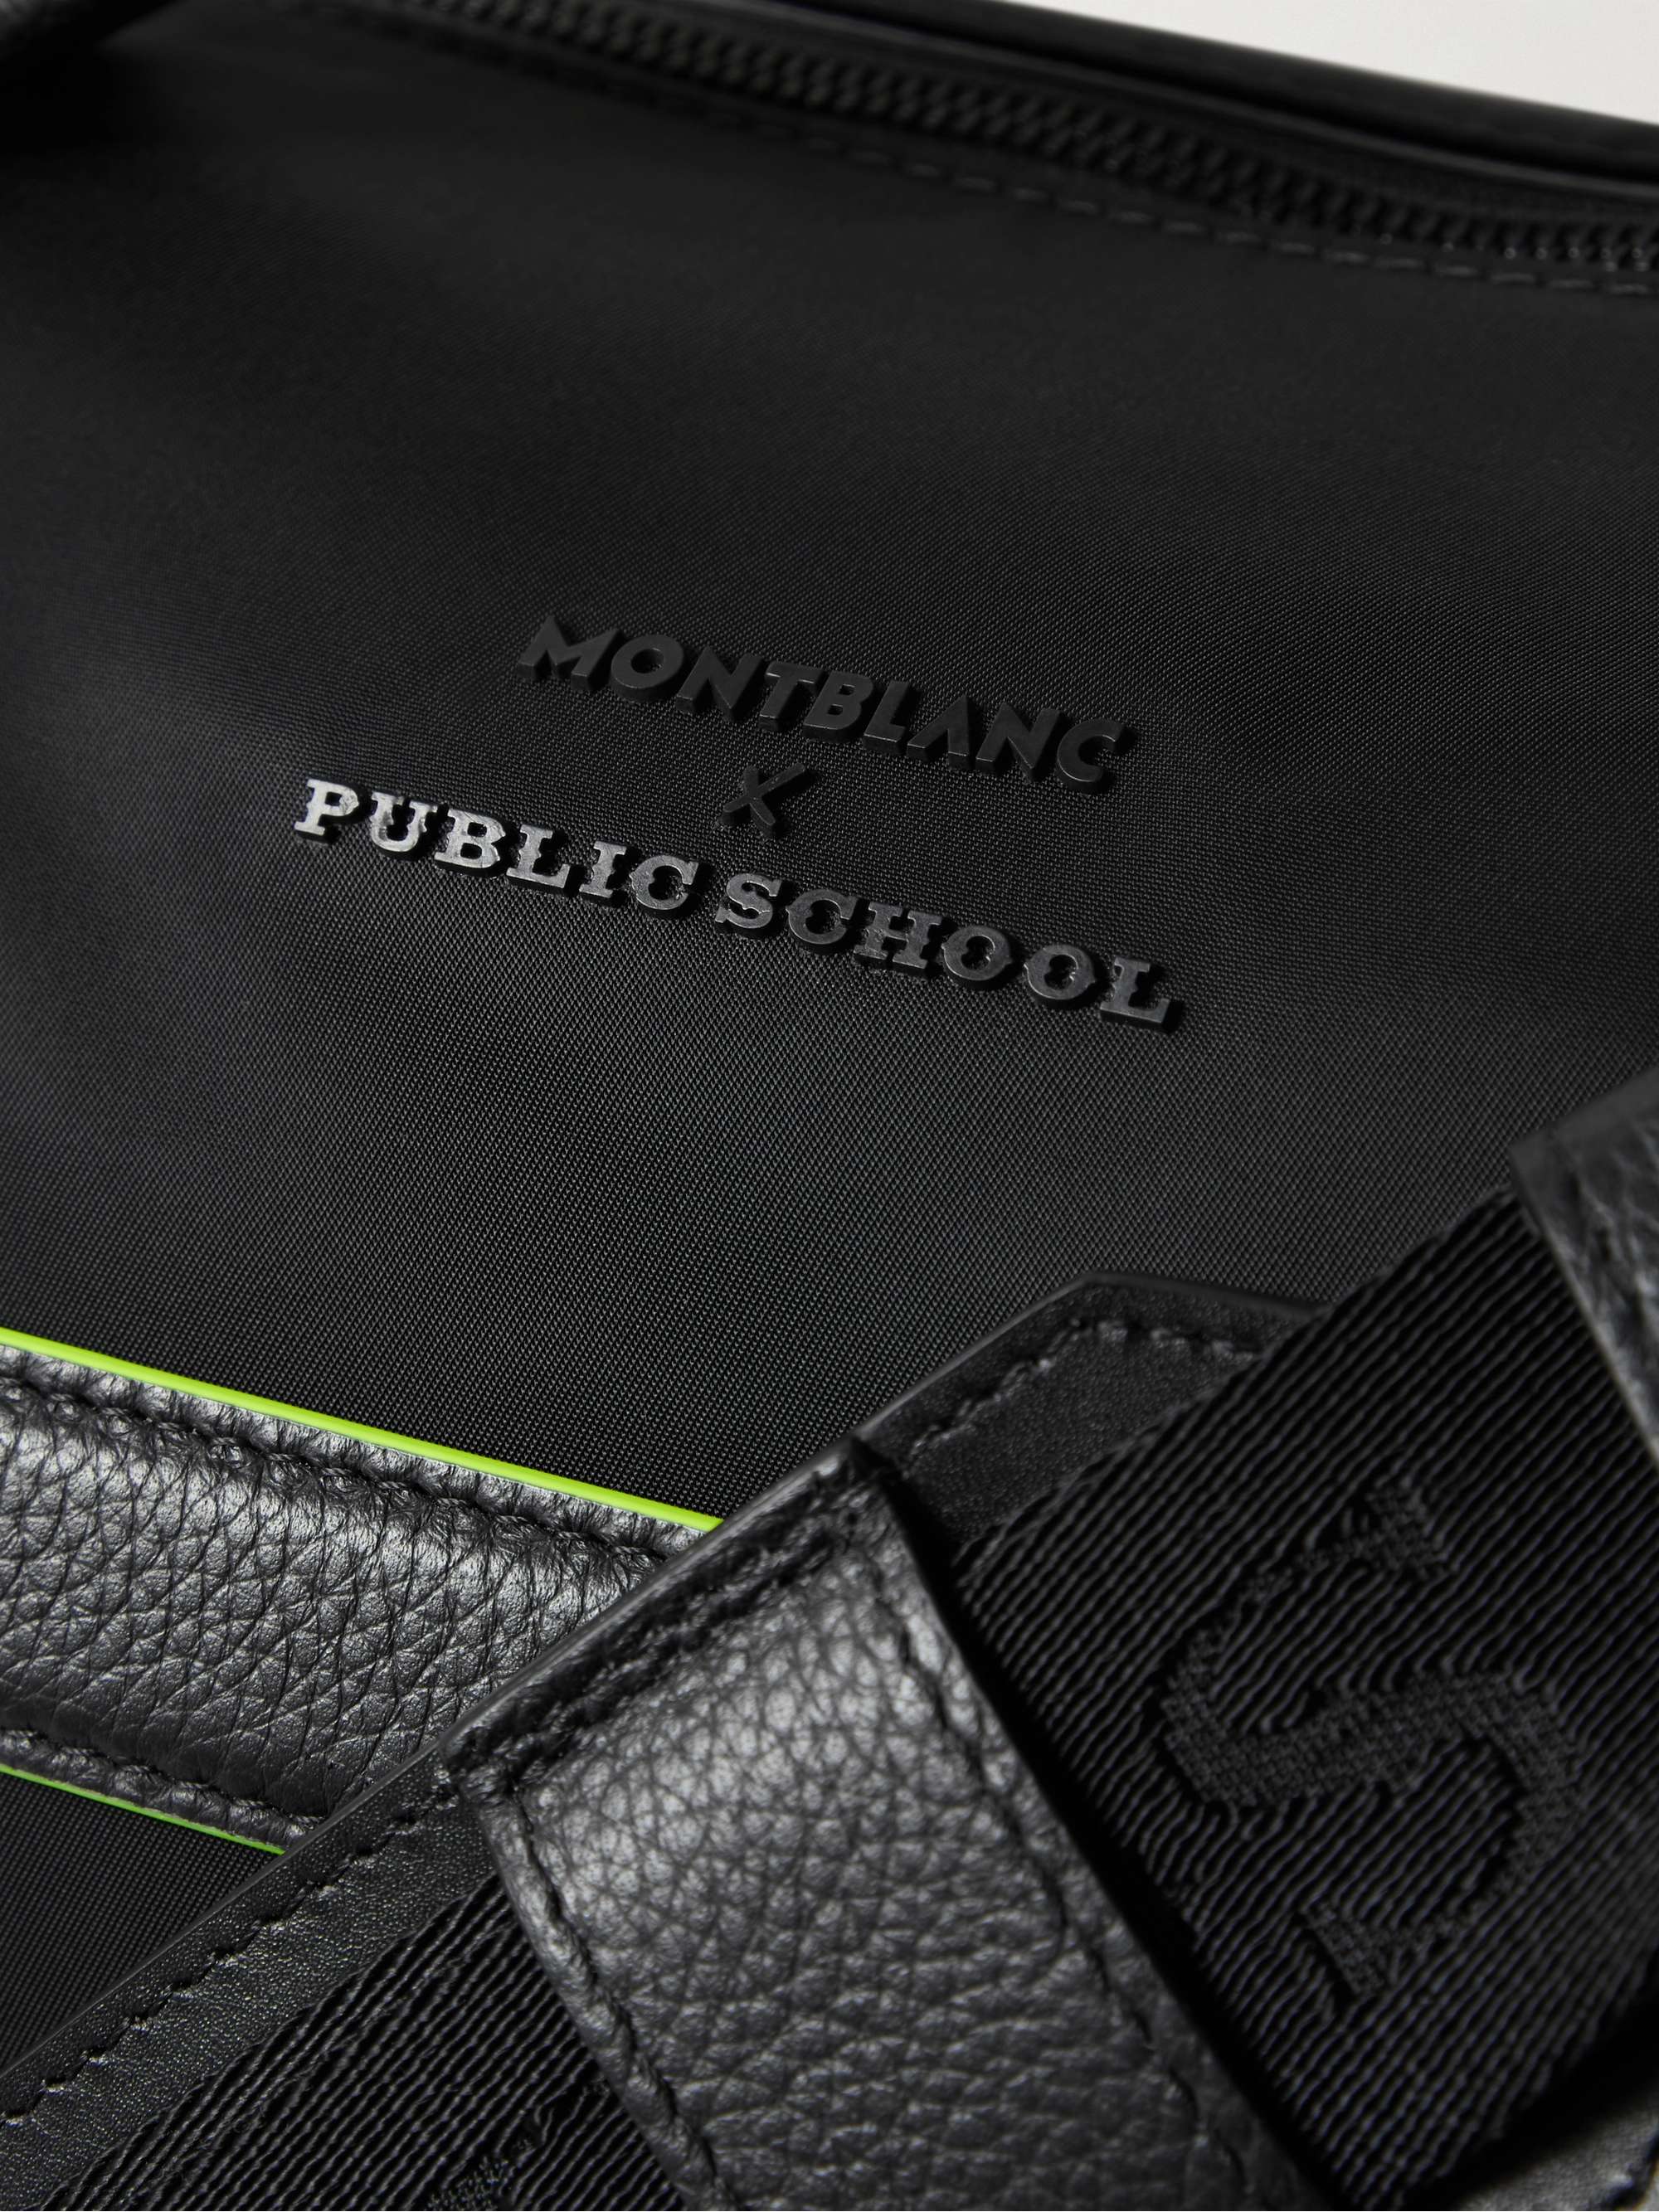 MONTBLANC + Public School Blue Spirit Leather-Trimmed ECONYL Duffle Bag